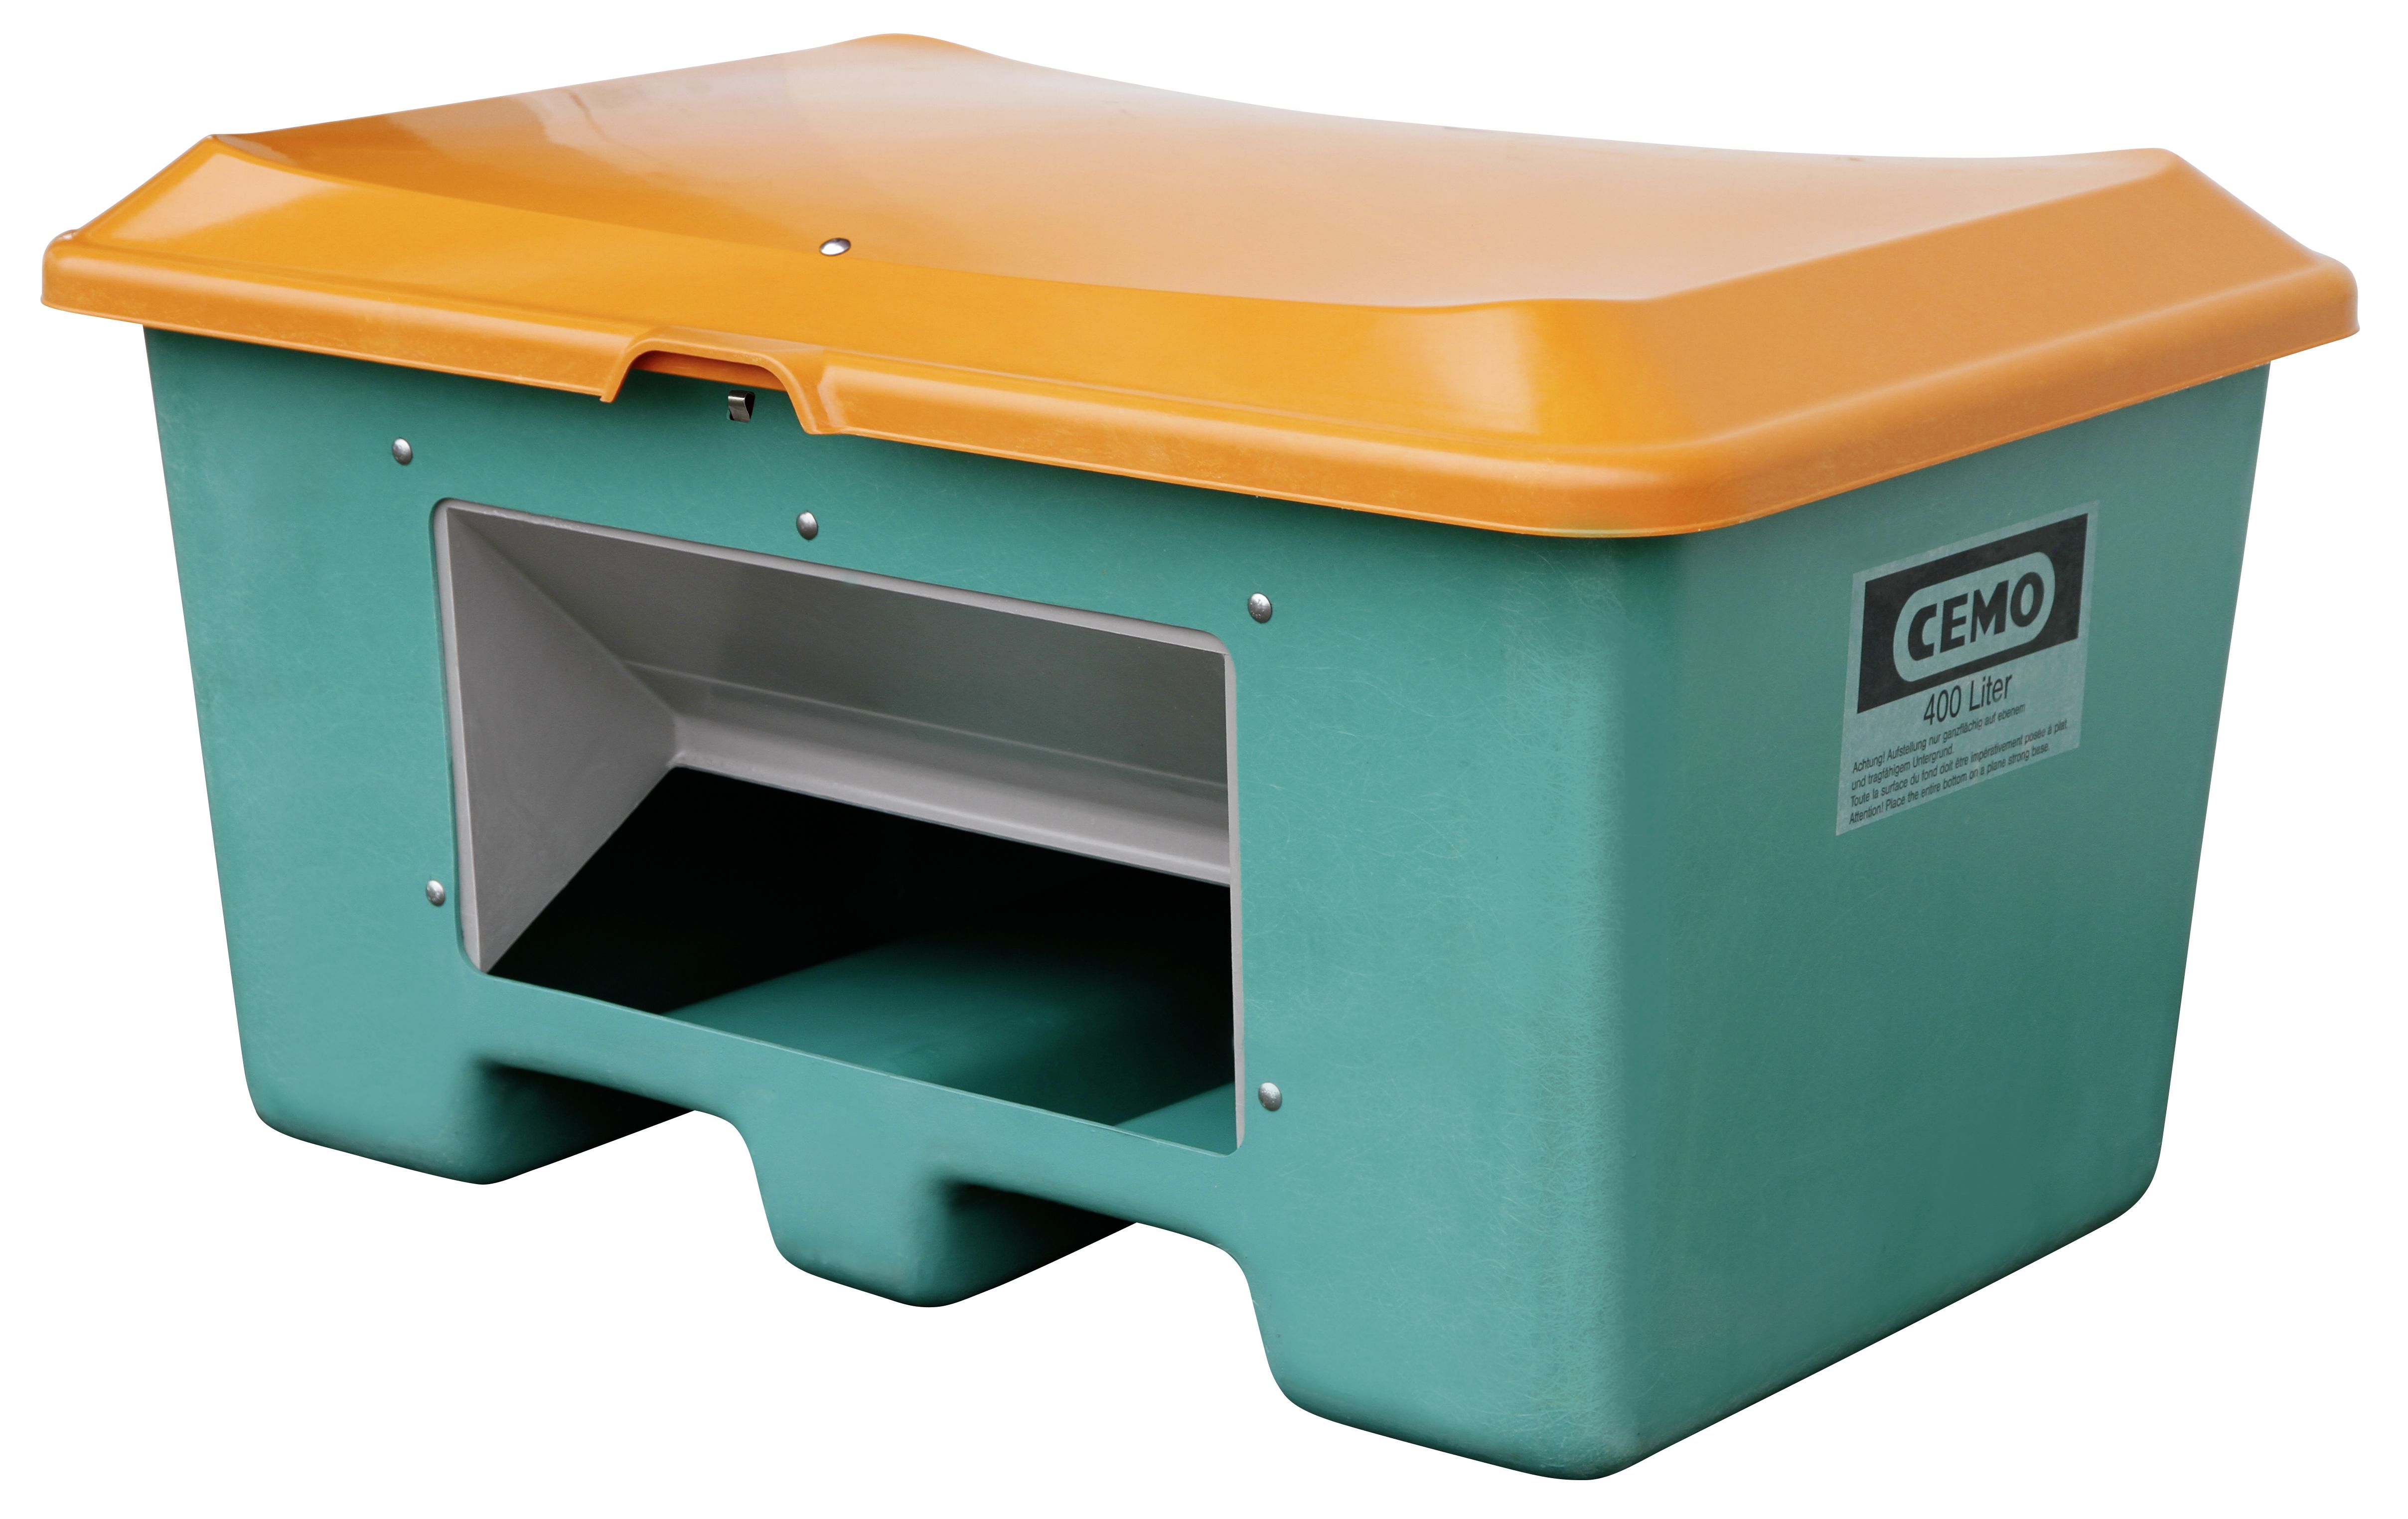 CEMO GFK Streugutbehälter PLUS3, 400 l, grün/orange - 10581